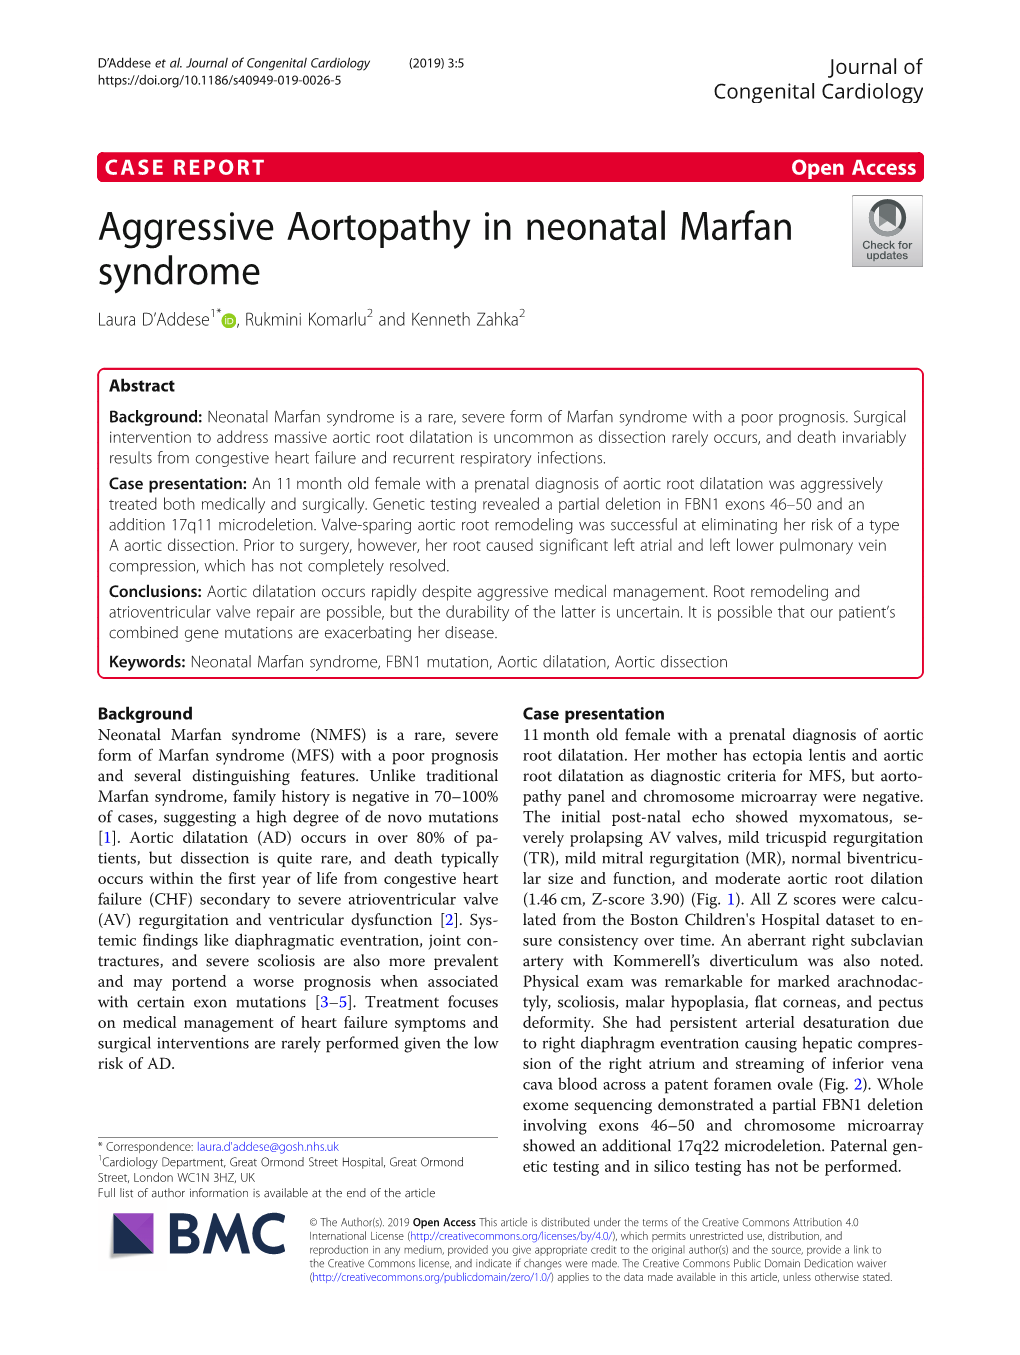 Aggressive Aortopathy in Neonatal Marfan Syndrome Laura D’Addese1* , Rukmini Komarlu2 and Kenneth Zahka2